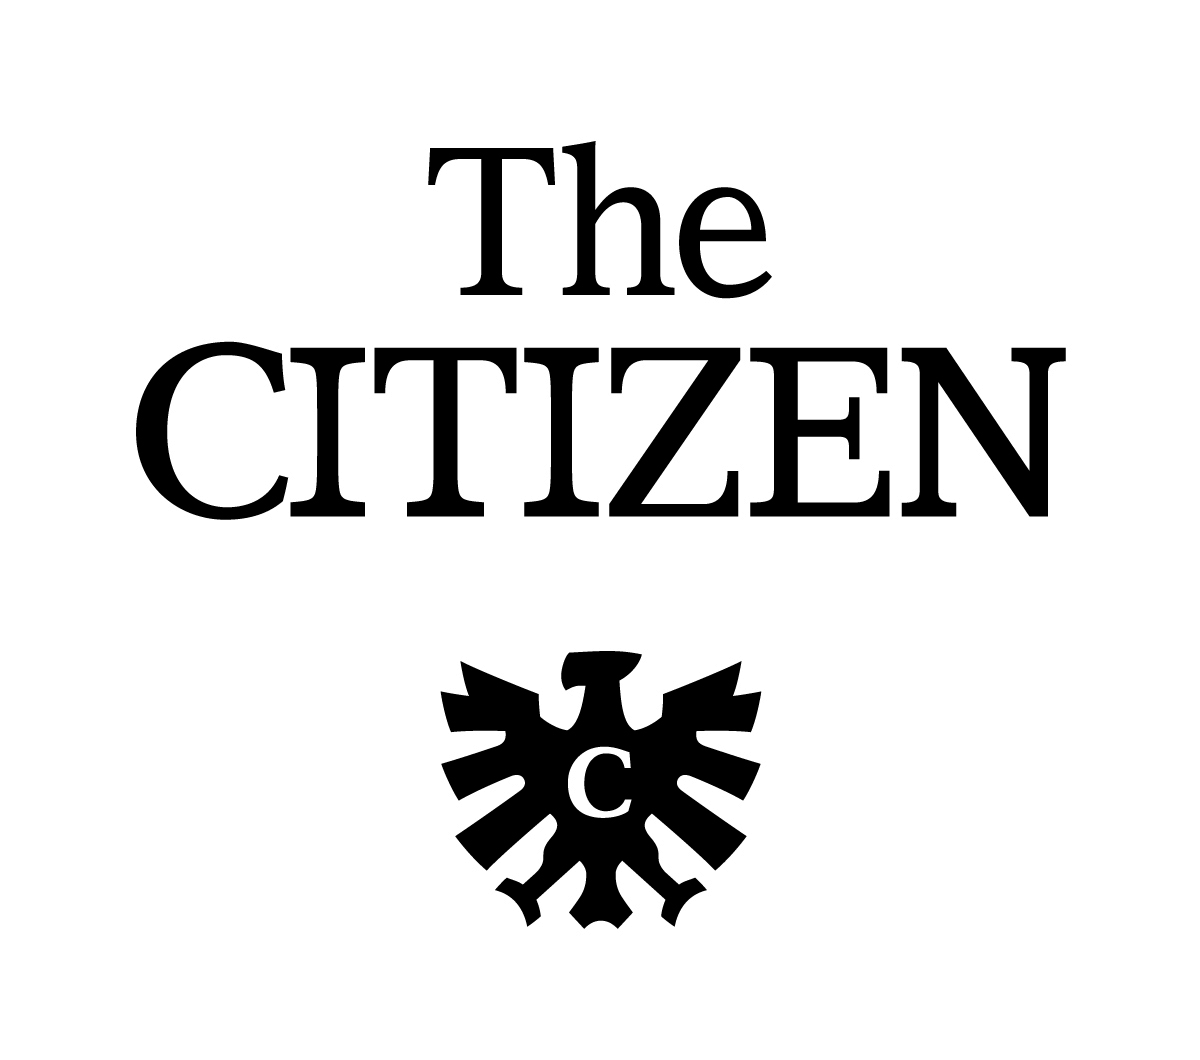 THE CITIZEN